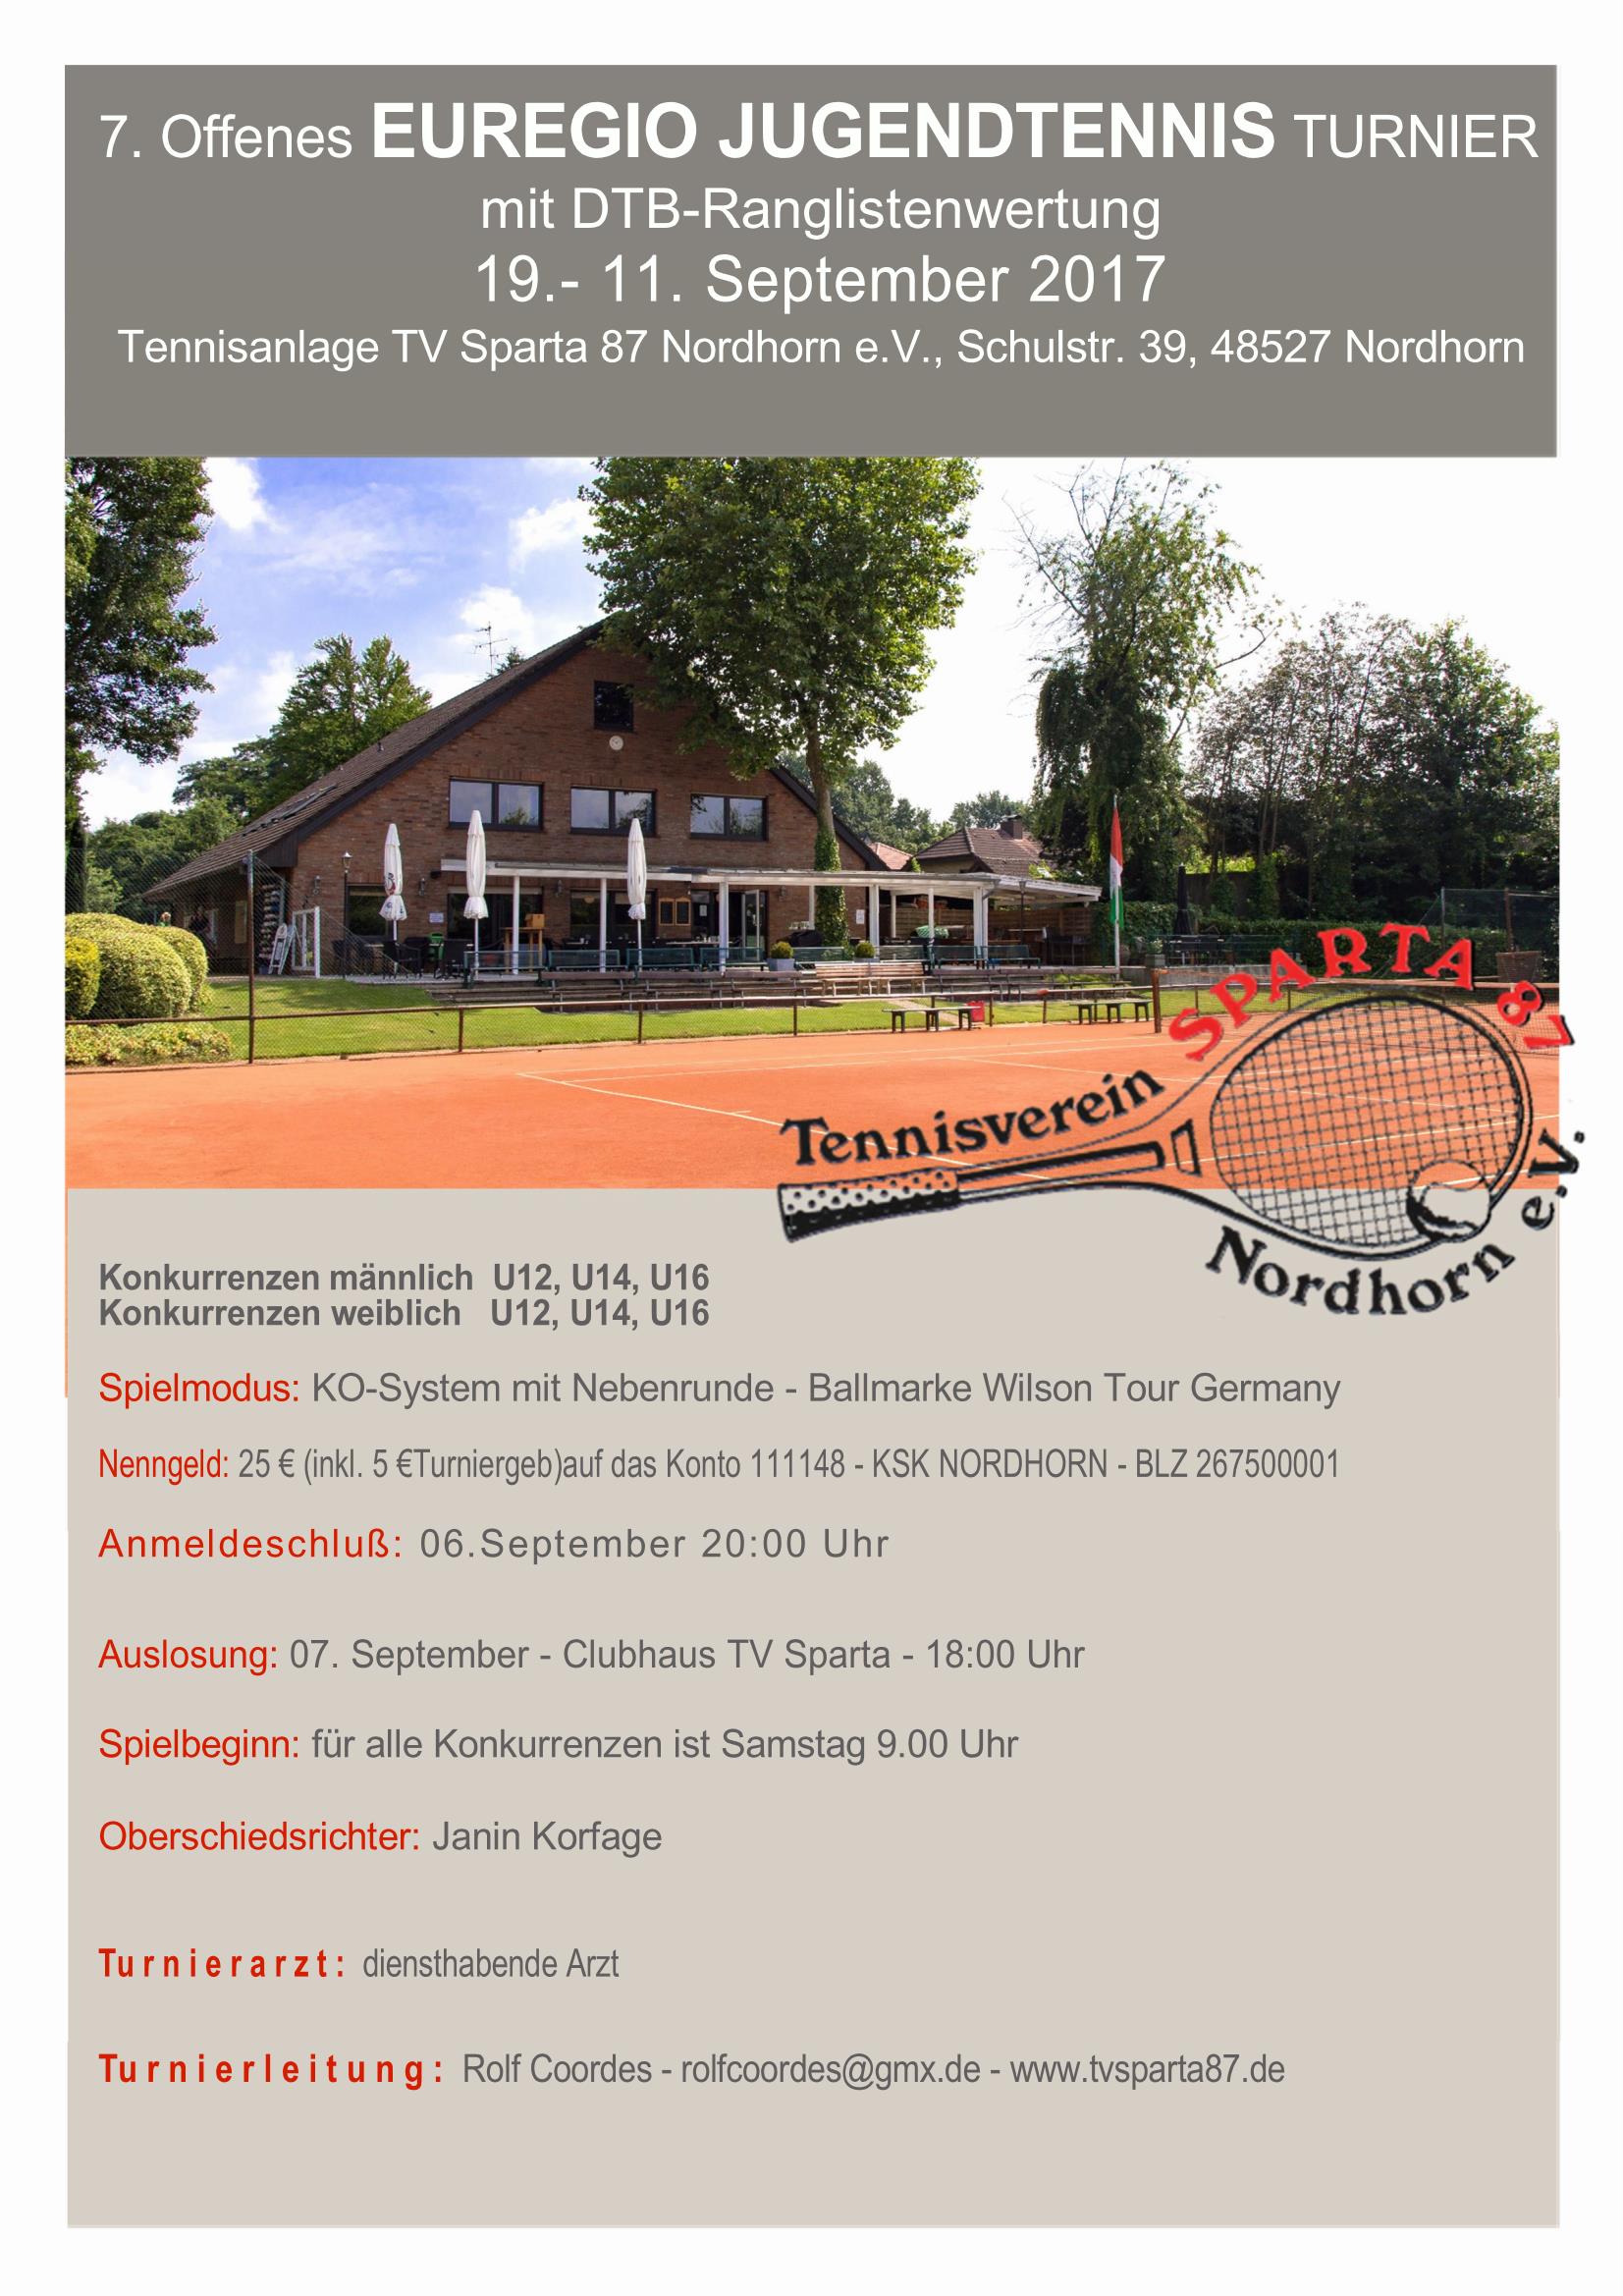 9.-10. September: 7. offenes Euregio Jugendtennis-Turnier